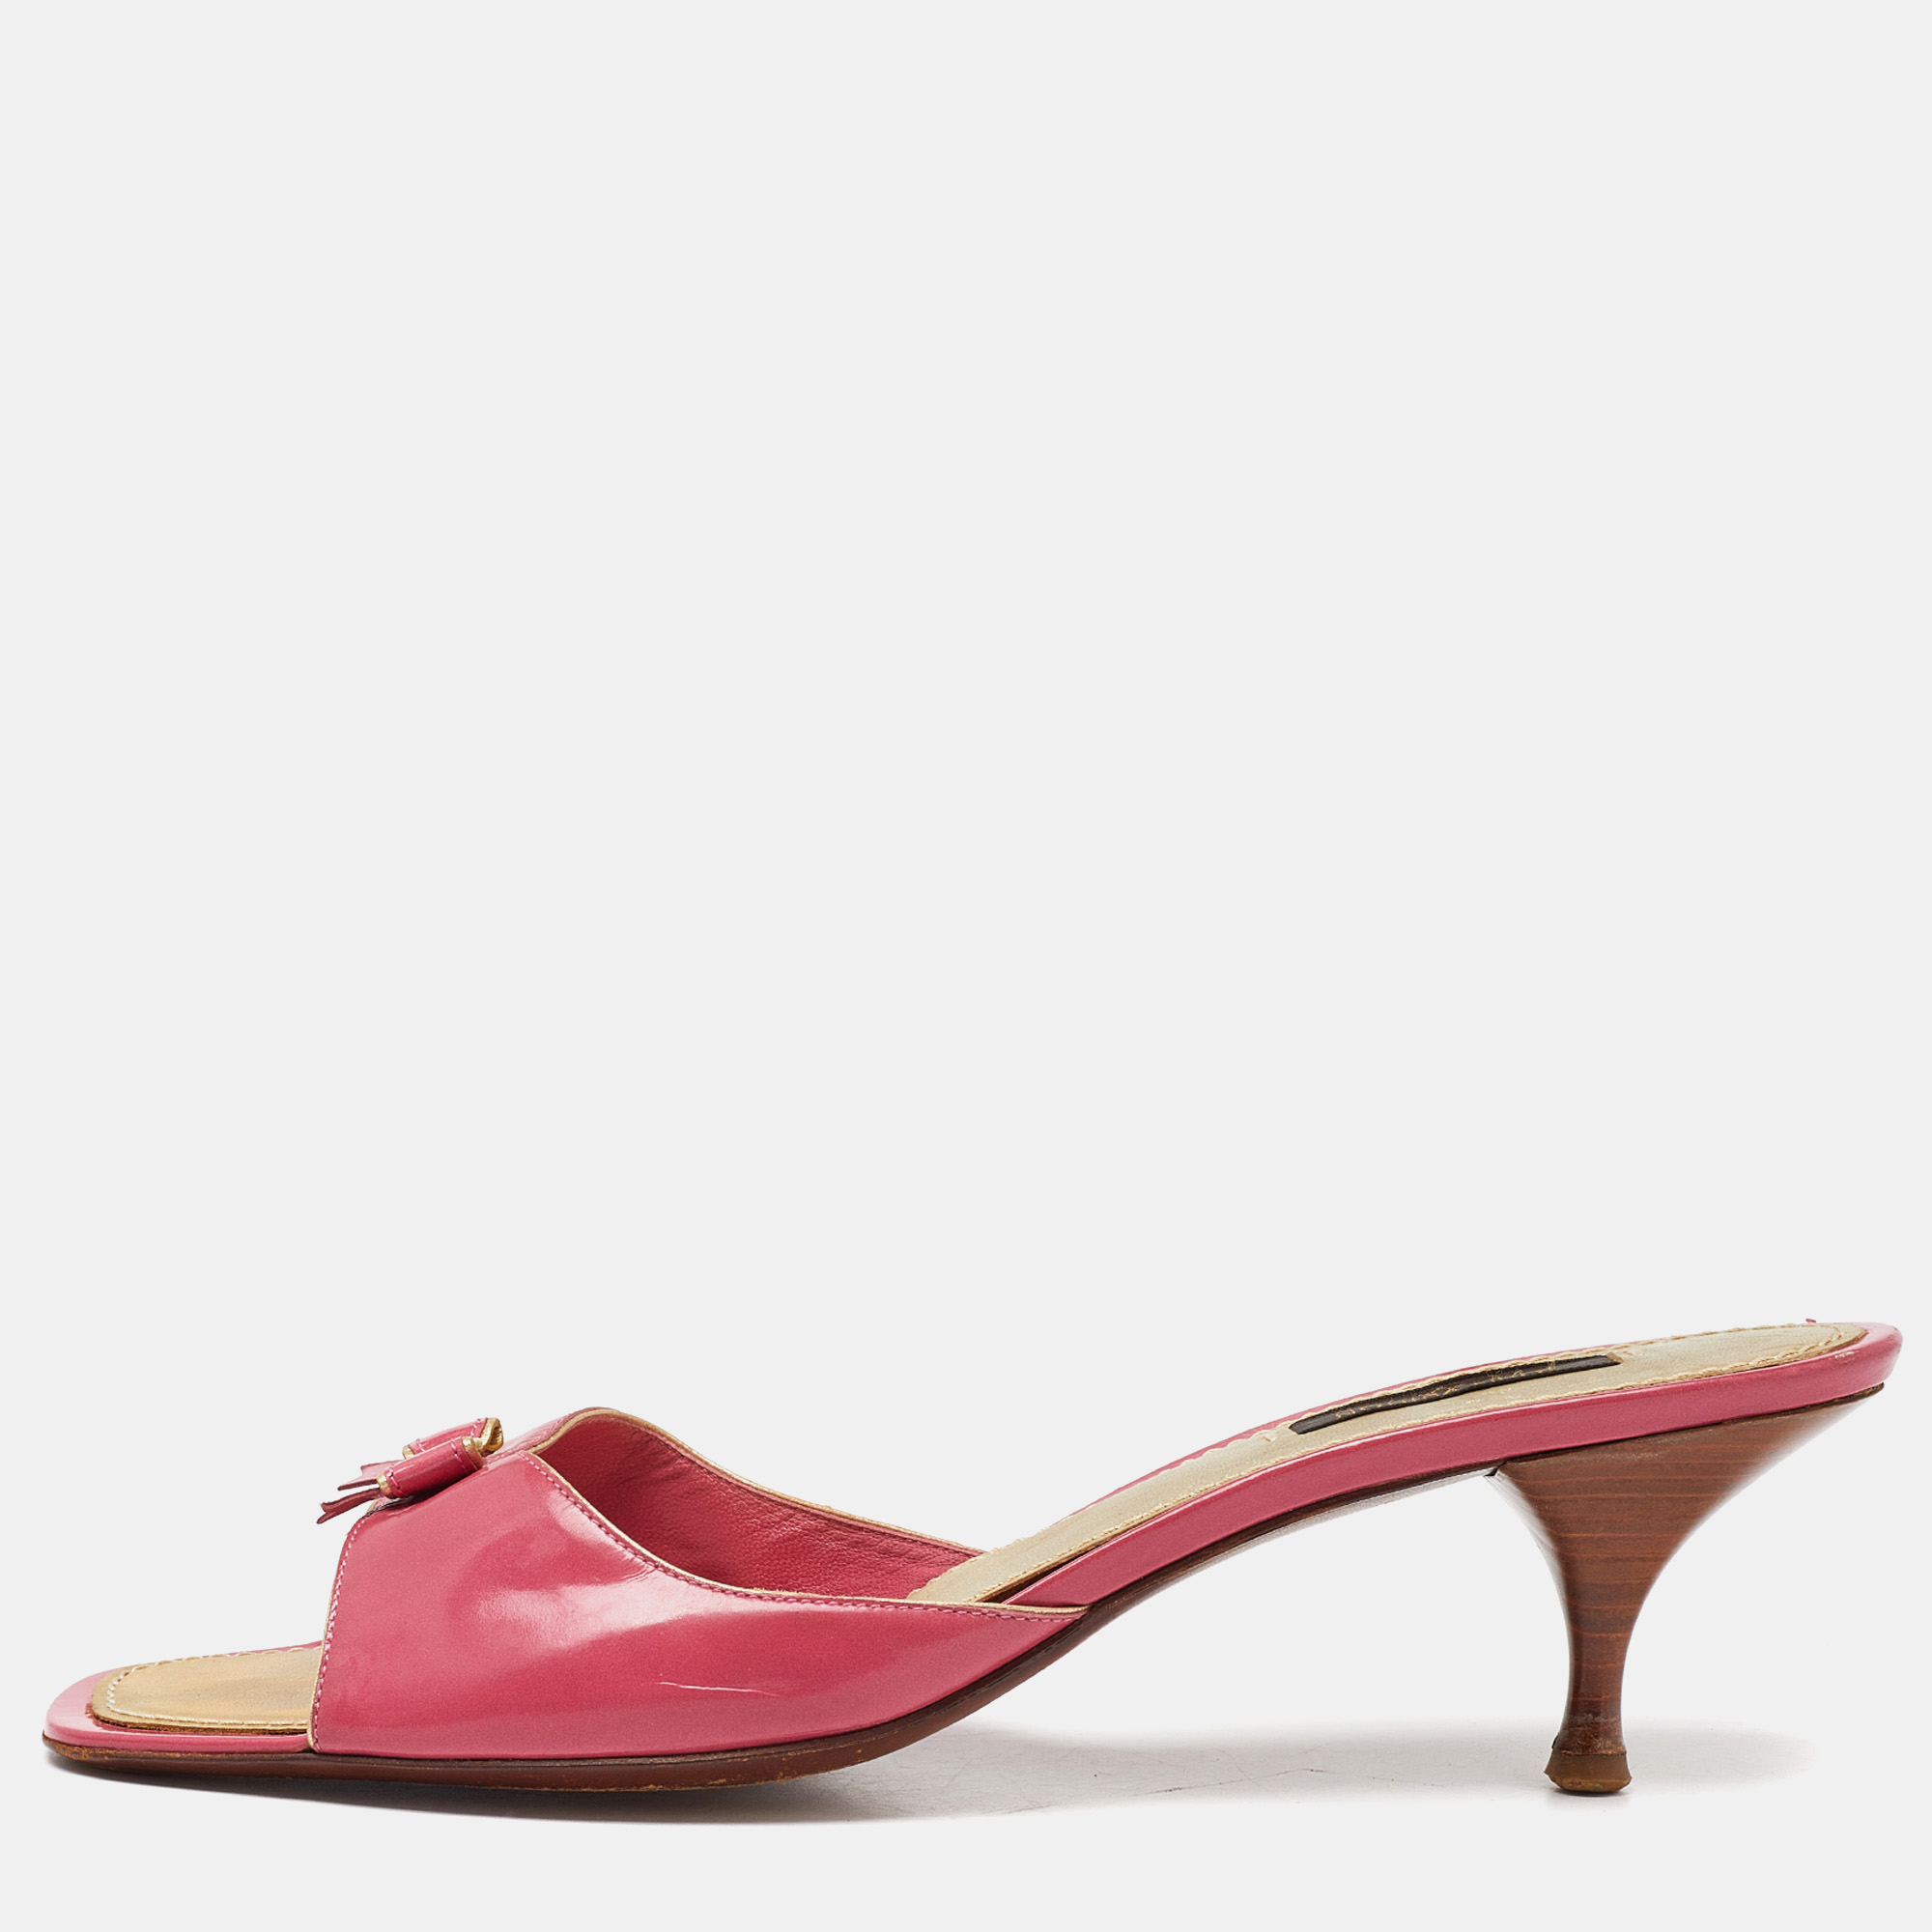 Louis vuitton pink patent leather bow open toe slide sandals size 42